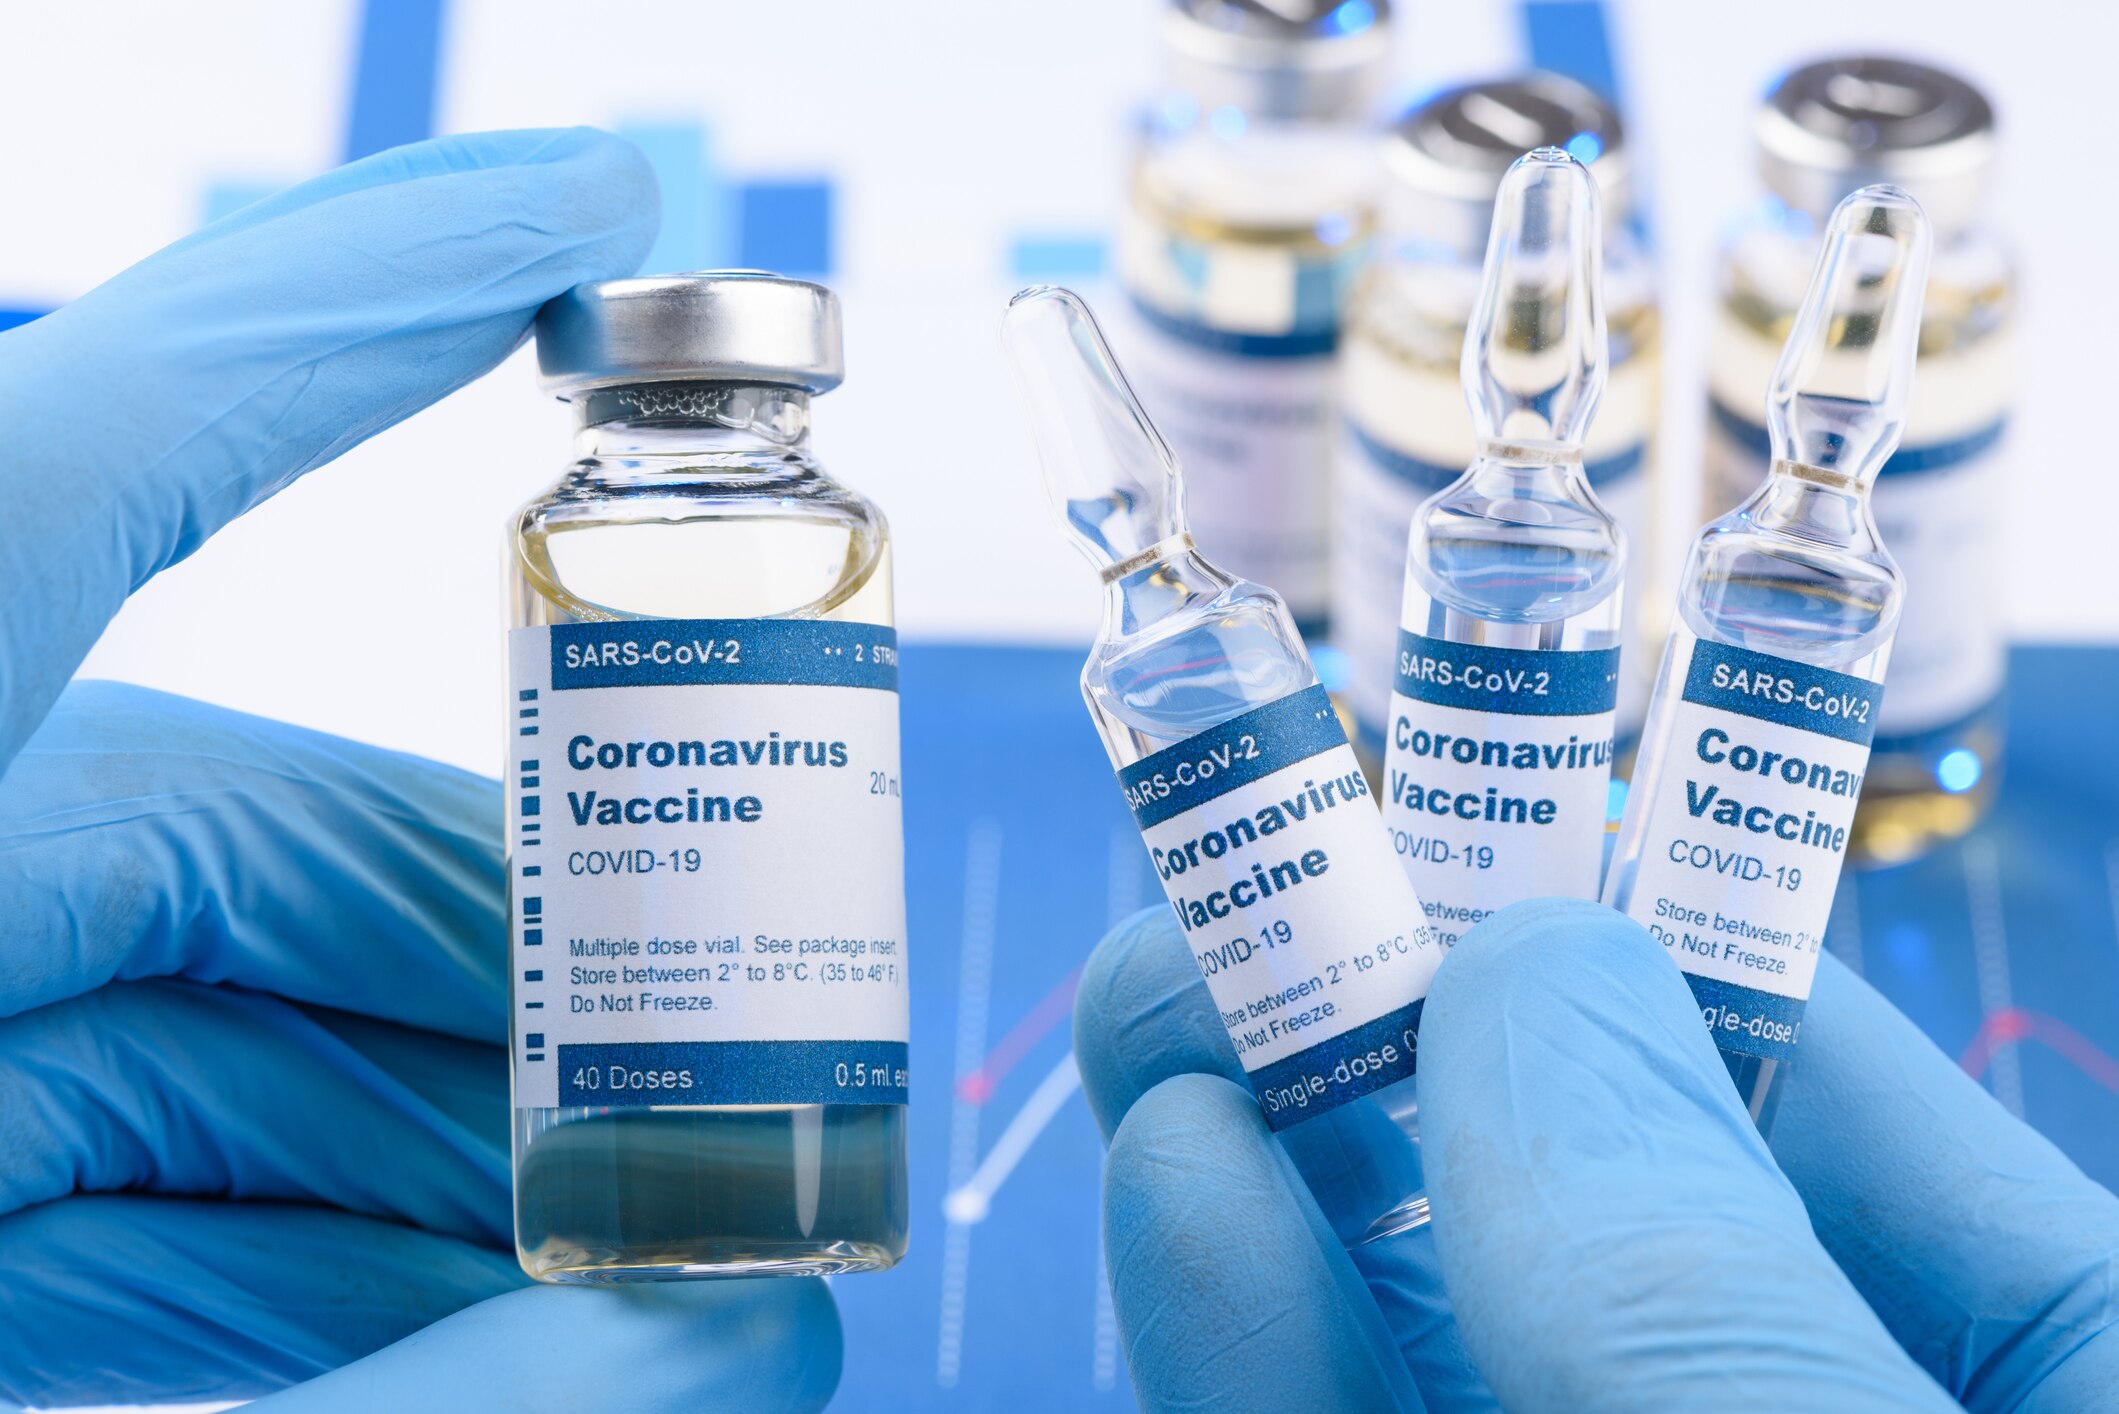 Should a COVID-19 vaccine be mandatory?